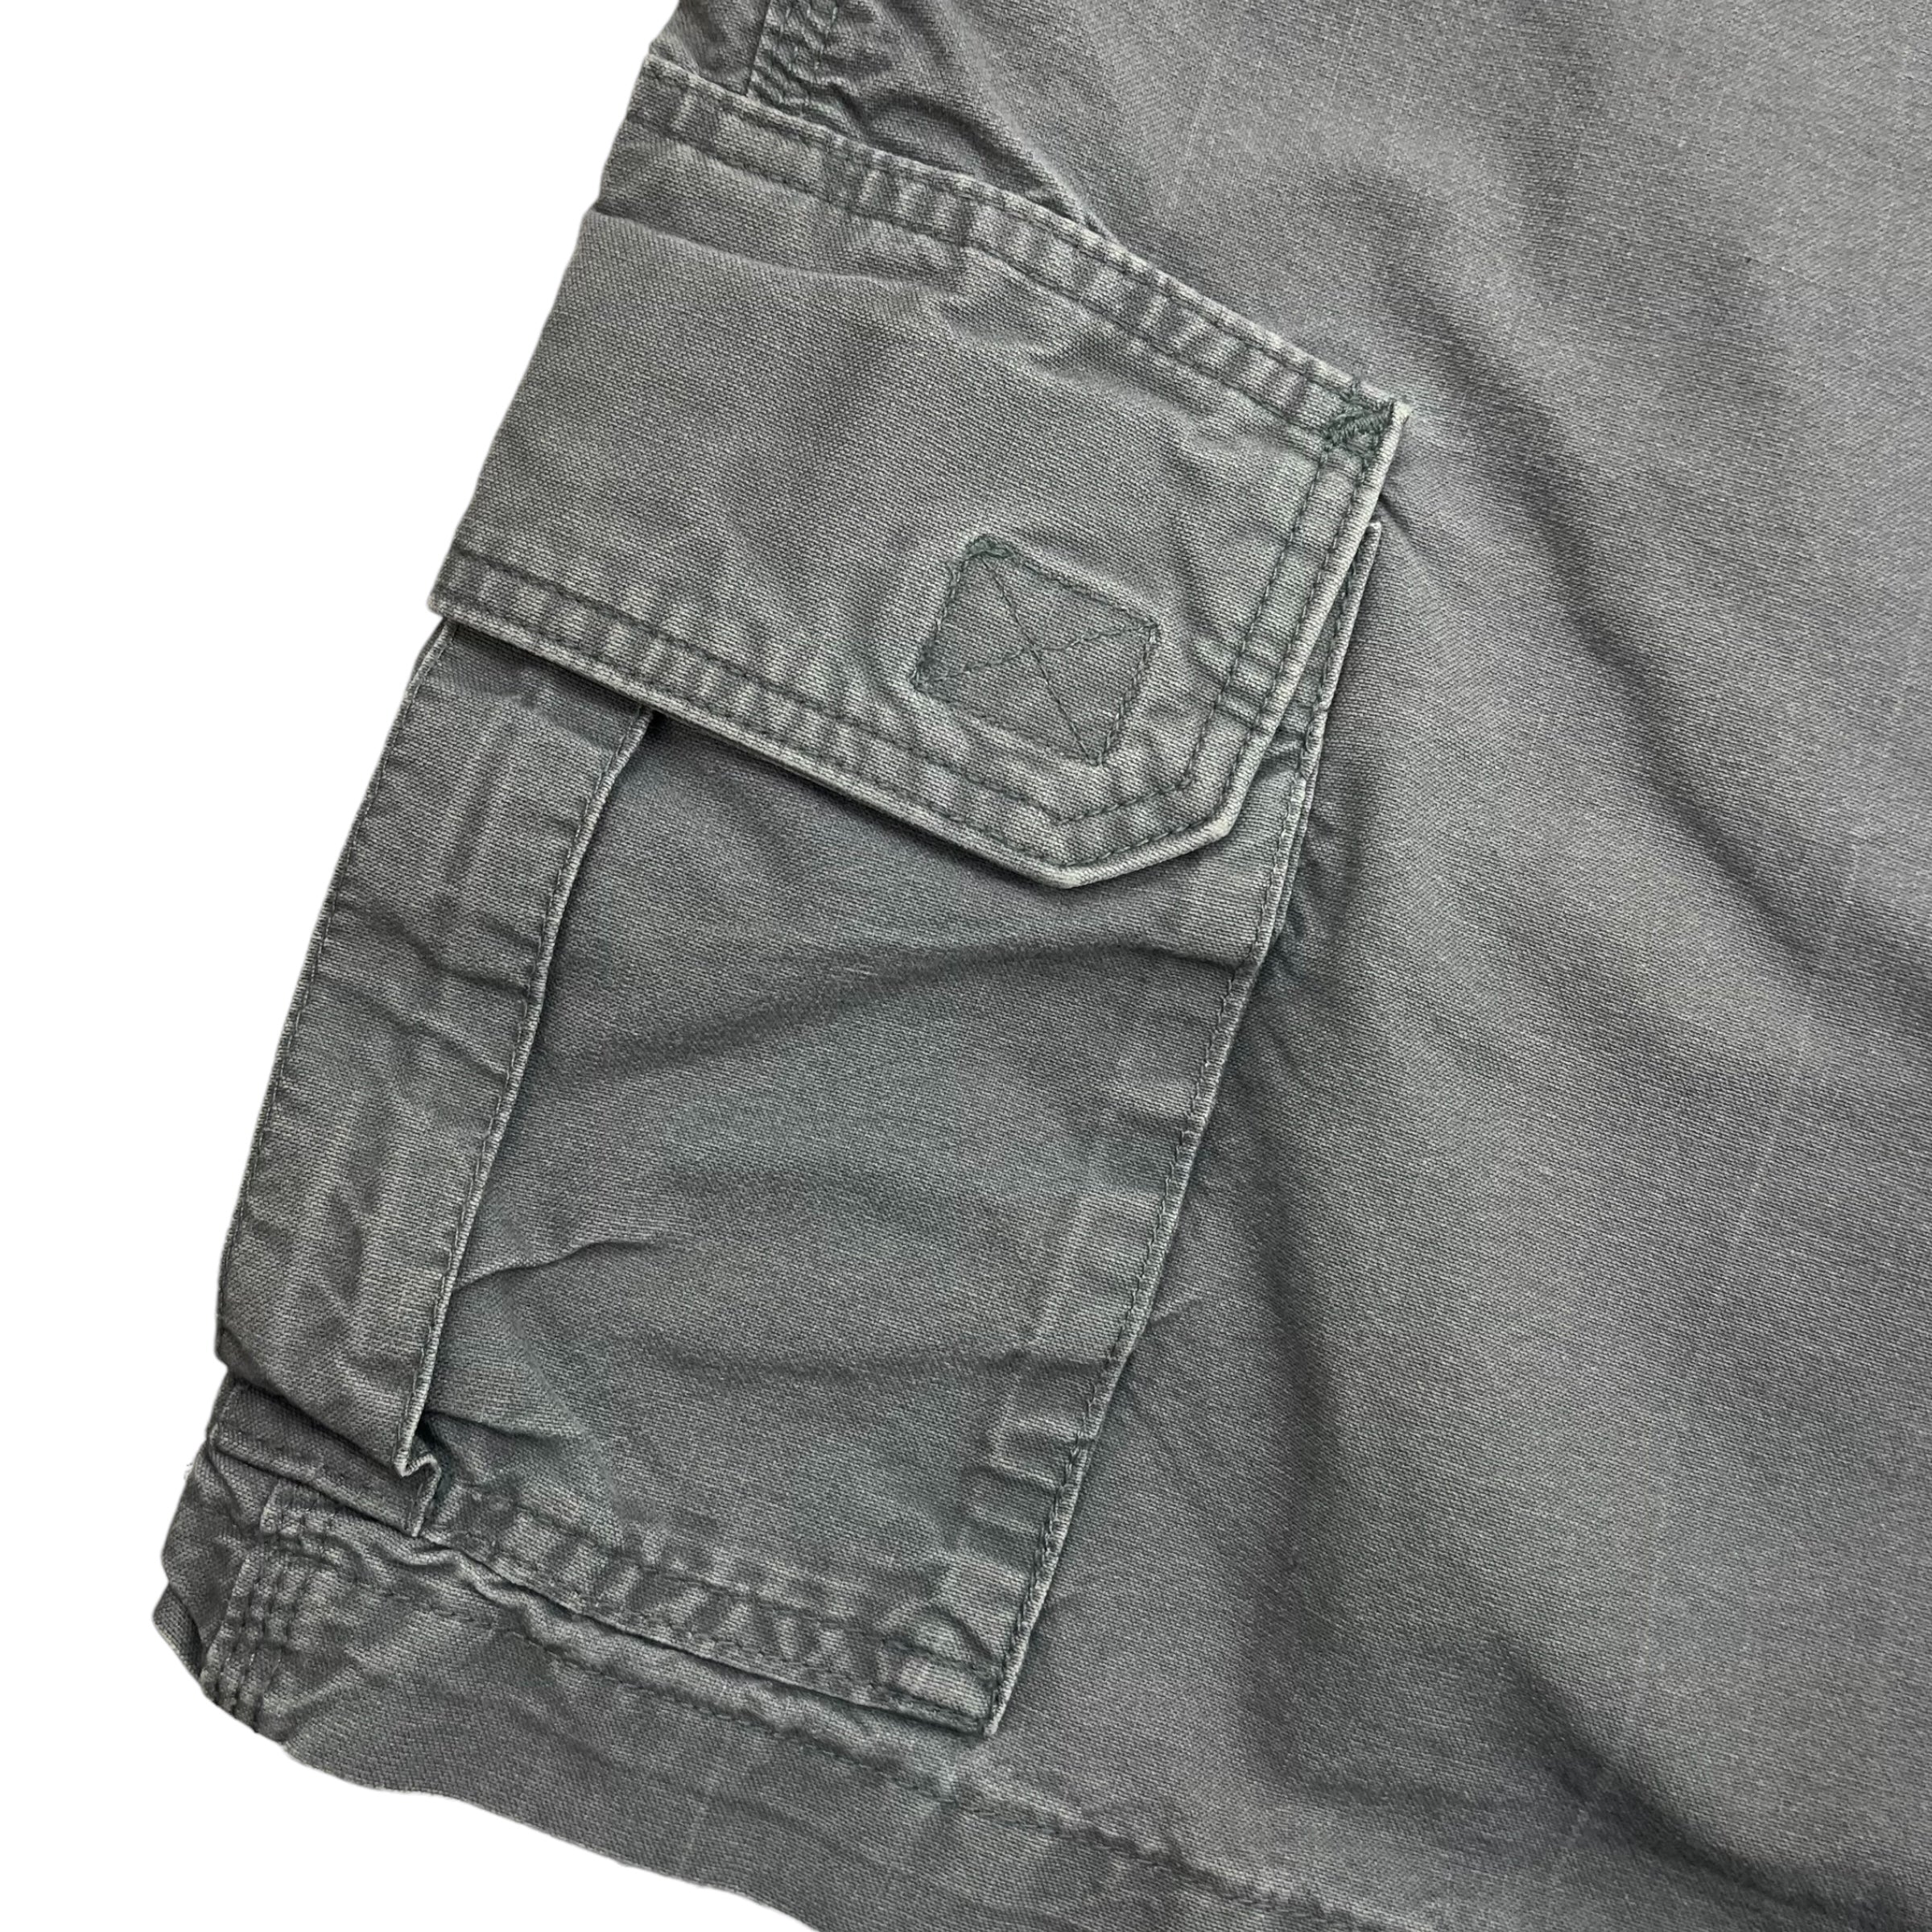 Vintage Carhartt Cargo Shorts Grey